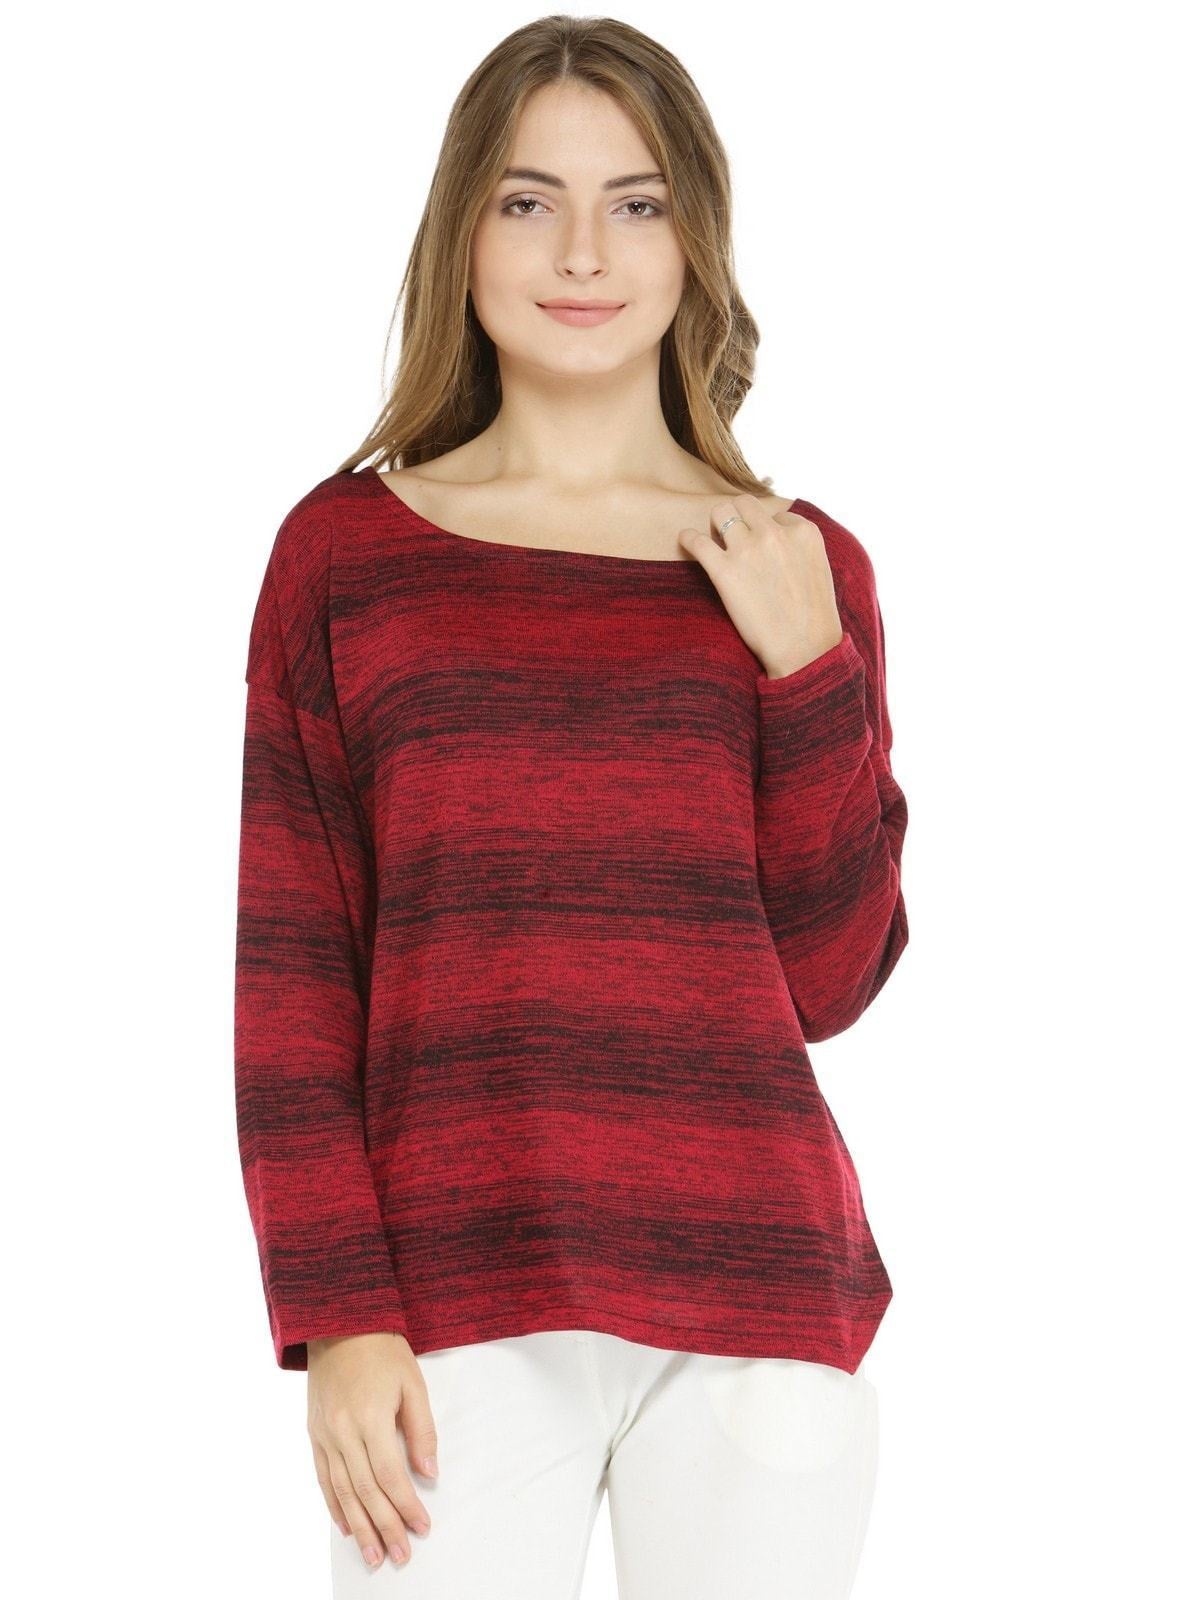 Women's Milange Sweater - Pannkh